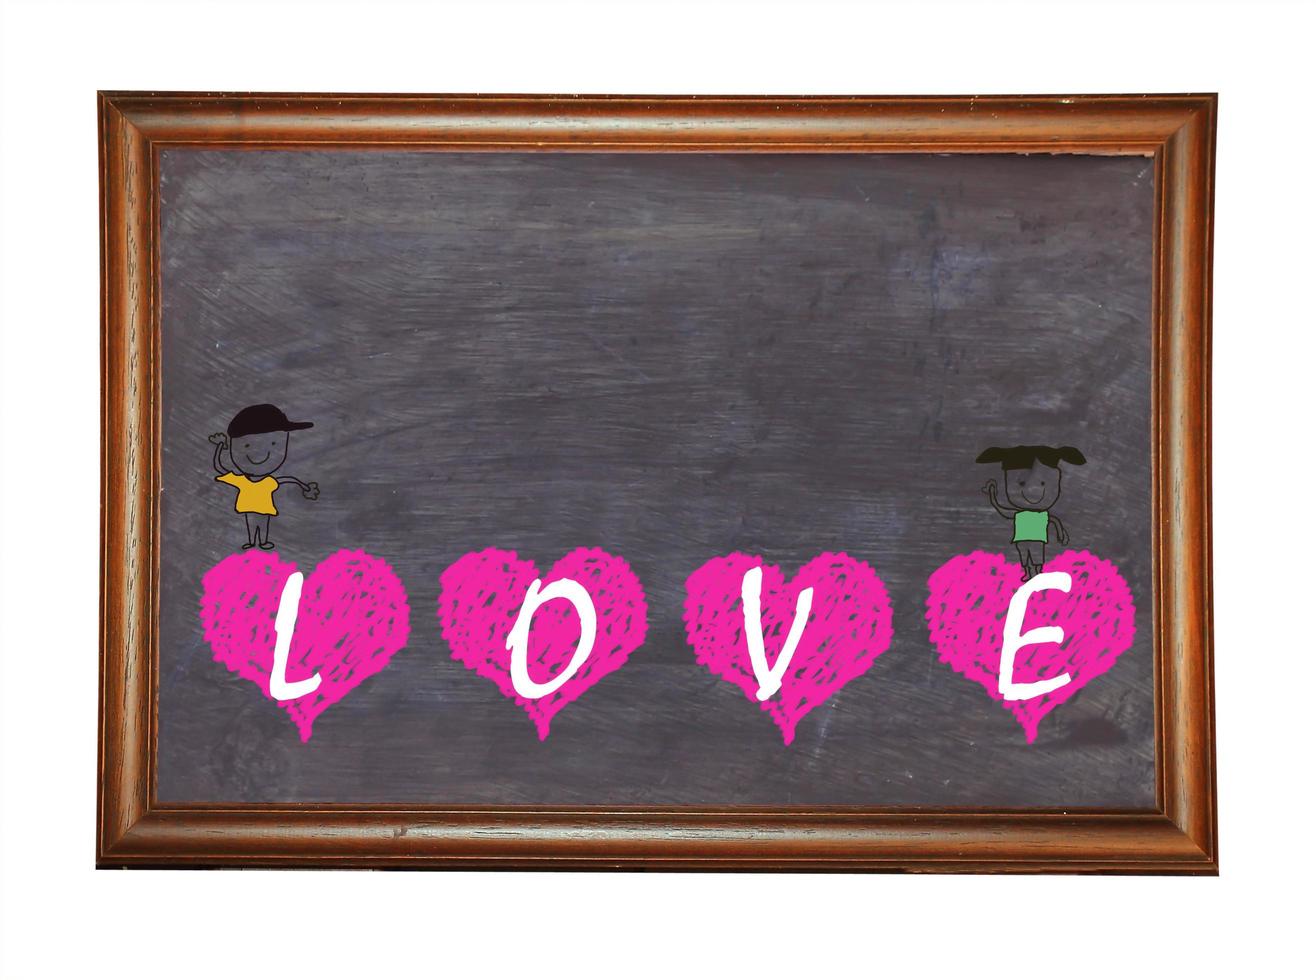 Blackboard with Love Heart Message written with Chalk photo